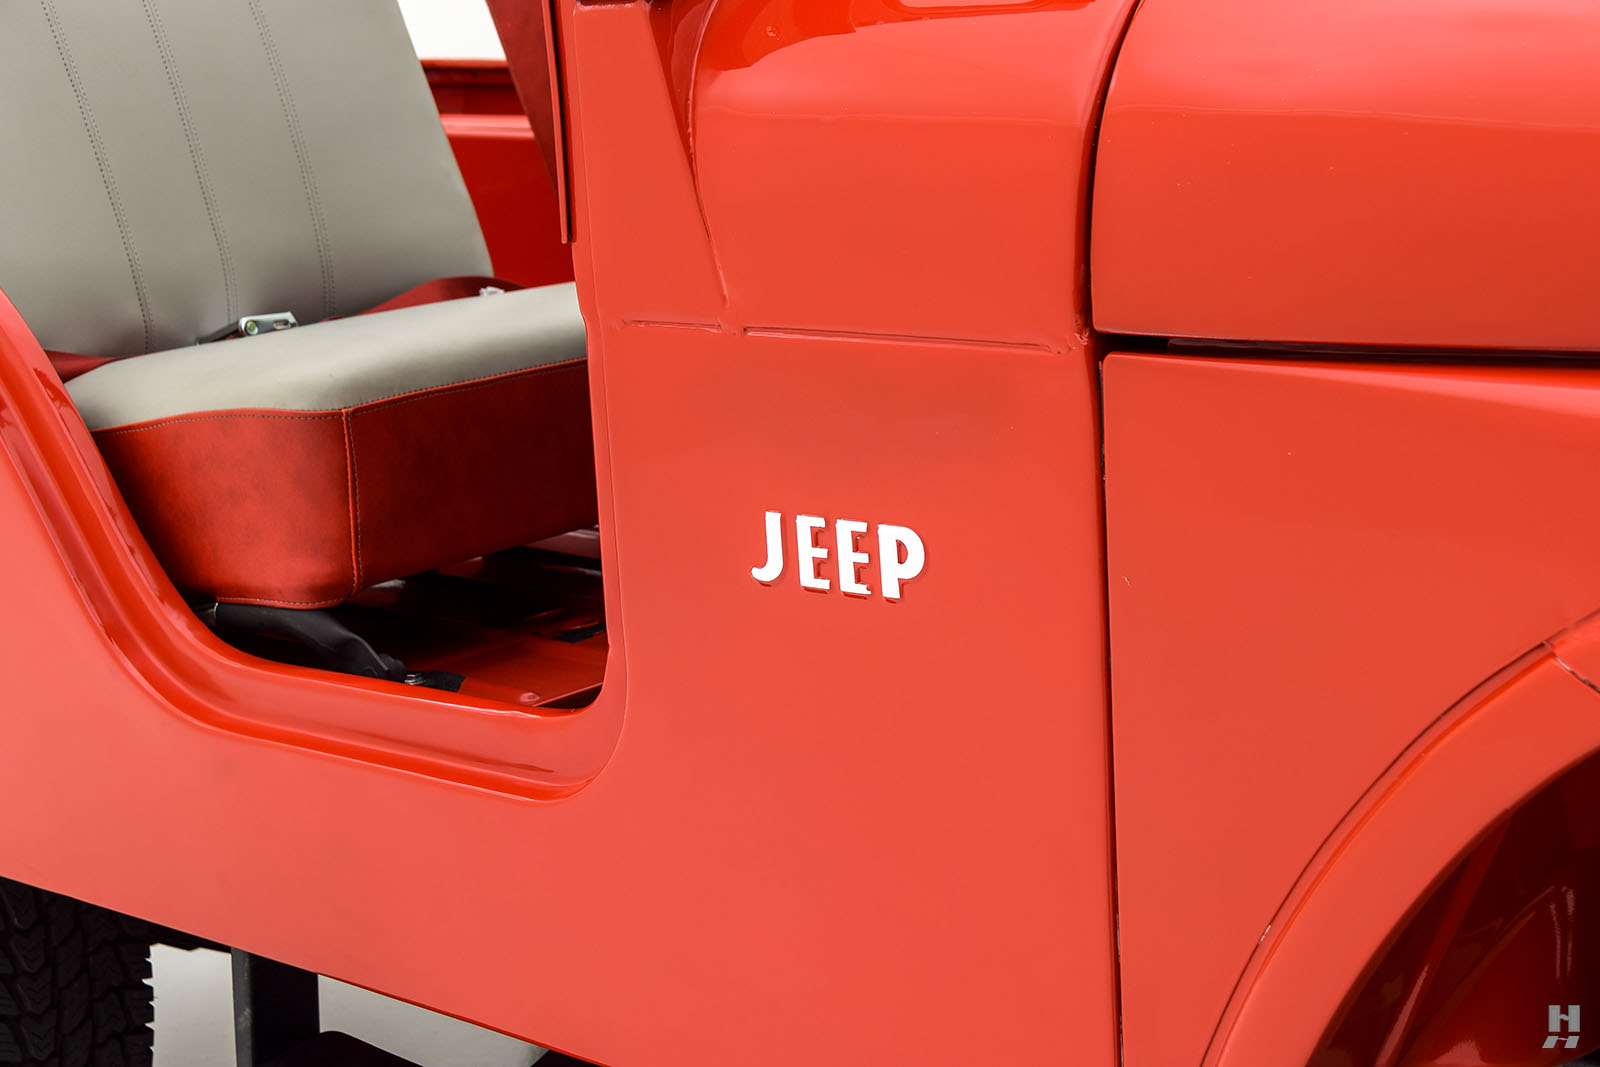 1967 jeep cj-5a tuxedo park